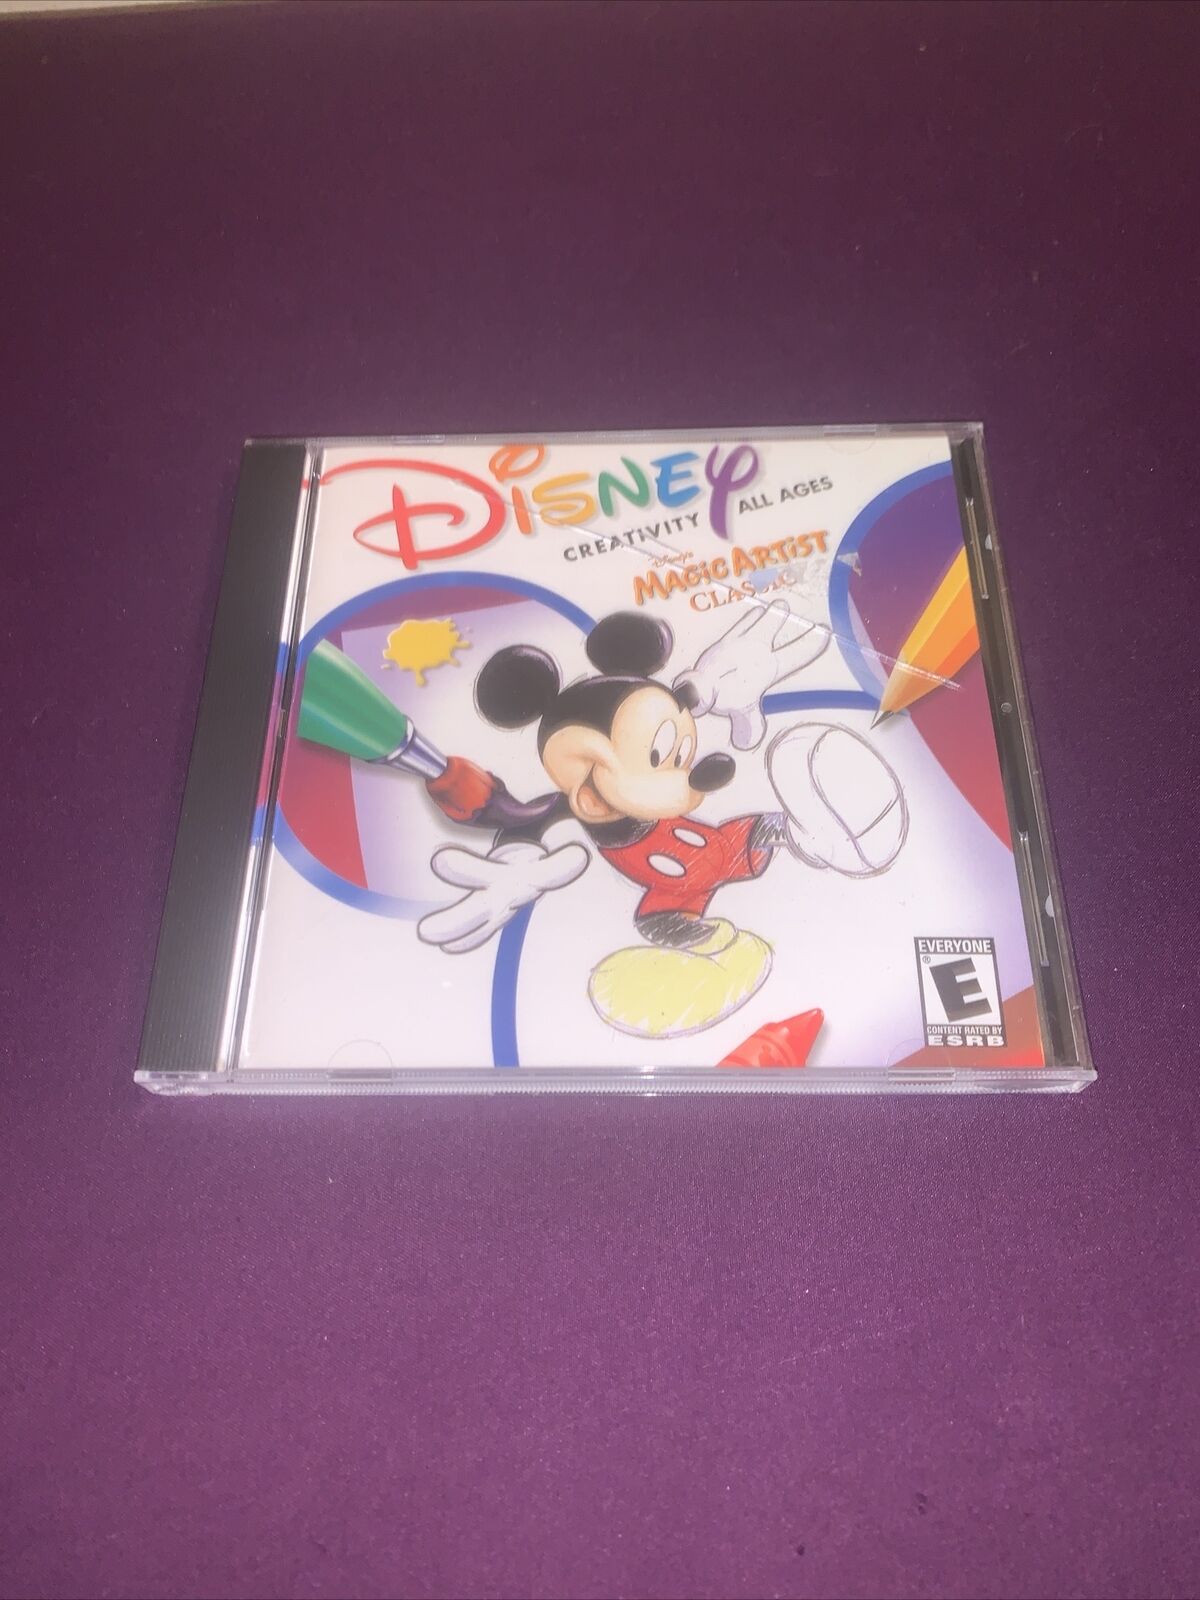 Vintage Disney Creativity: Magic Artist Classic (PC, 1997, Windows and Mac)